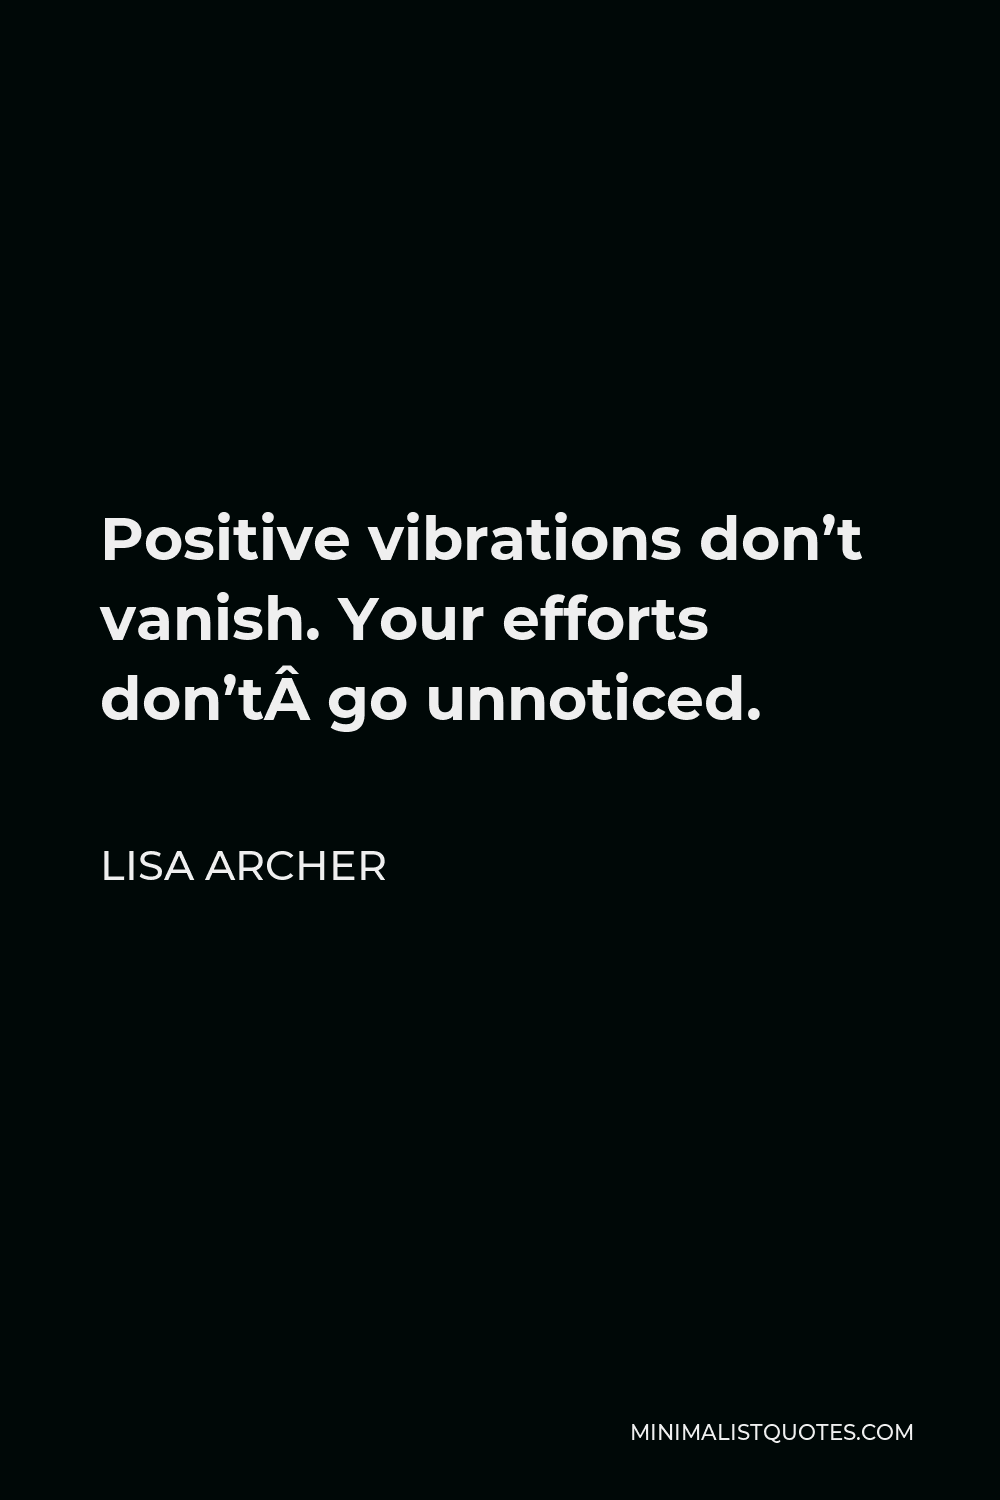 Lisa Archer Quote - Positive vibrations don’t vanish. Your efforts don’t go unnoticed.